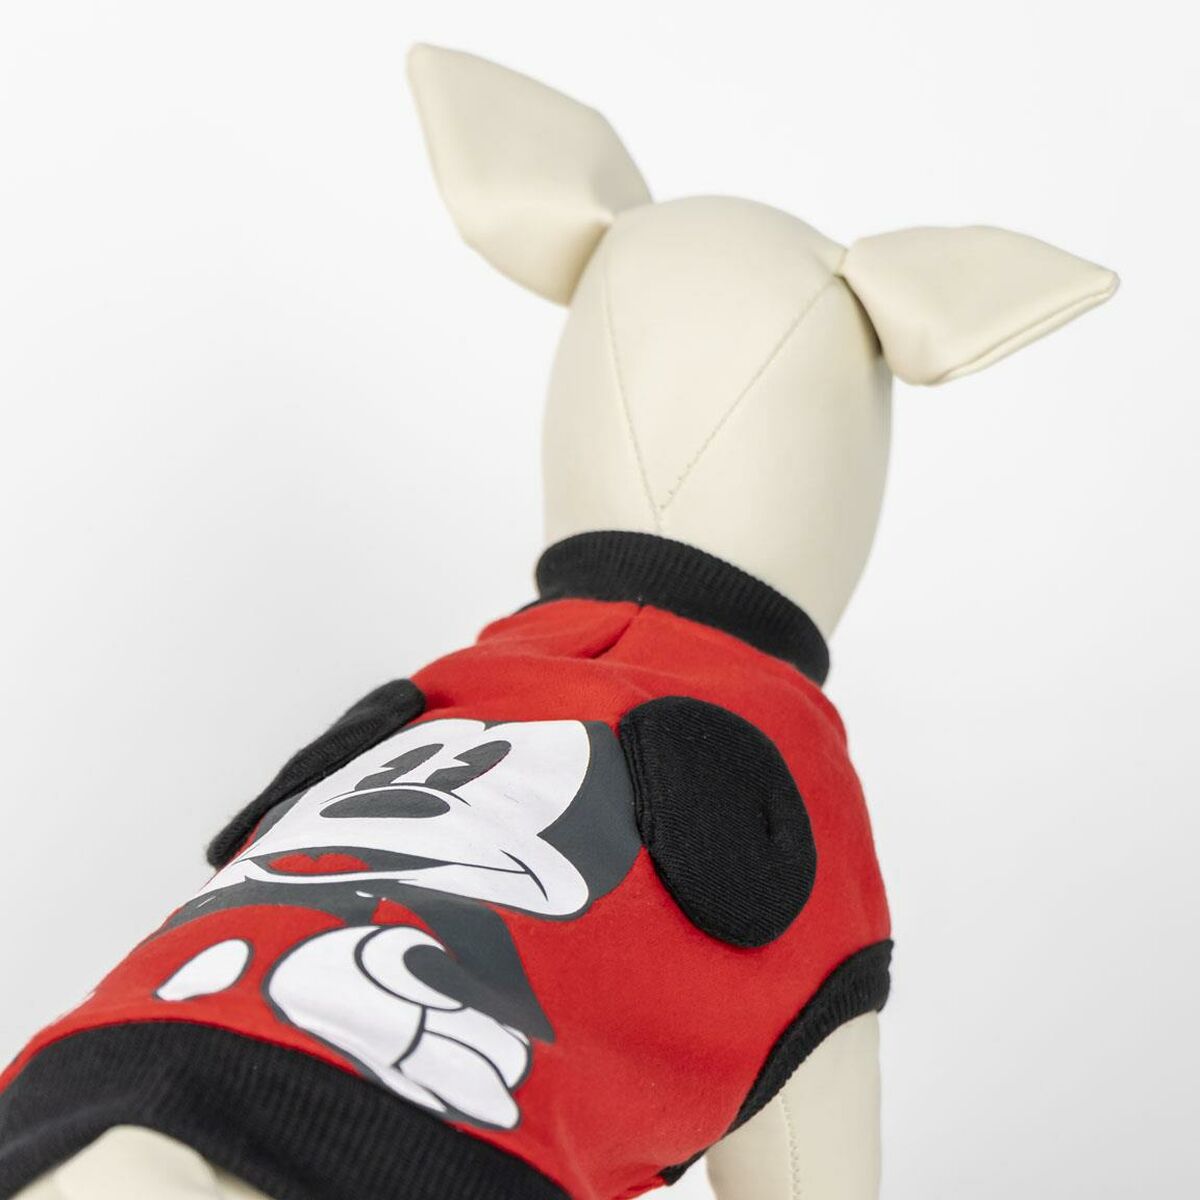 Dog Sweatshirt Mickey Mouse M Red